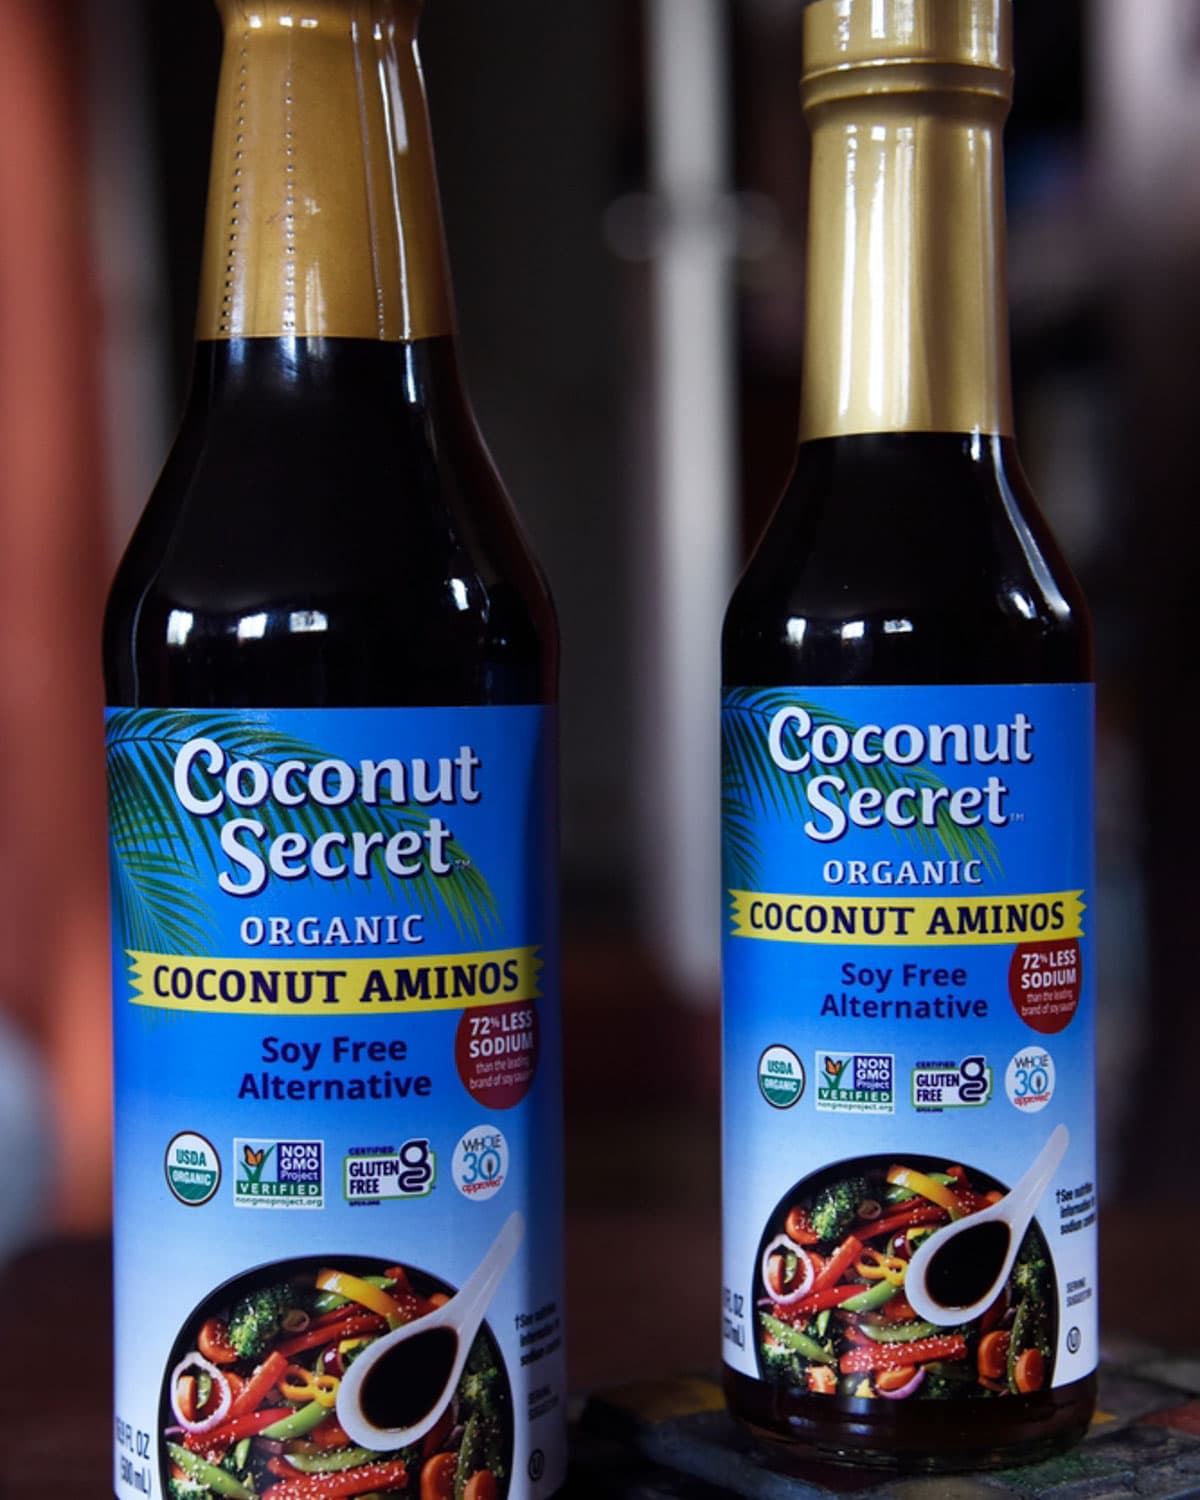 two bottles of coconut secret organic coconut aminos soy free alternative.